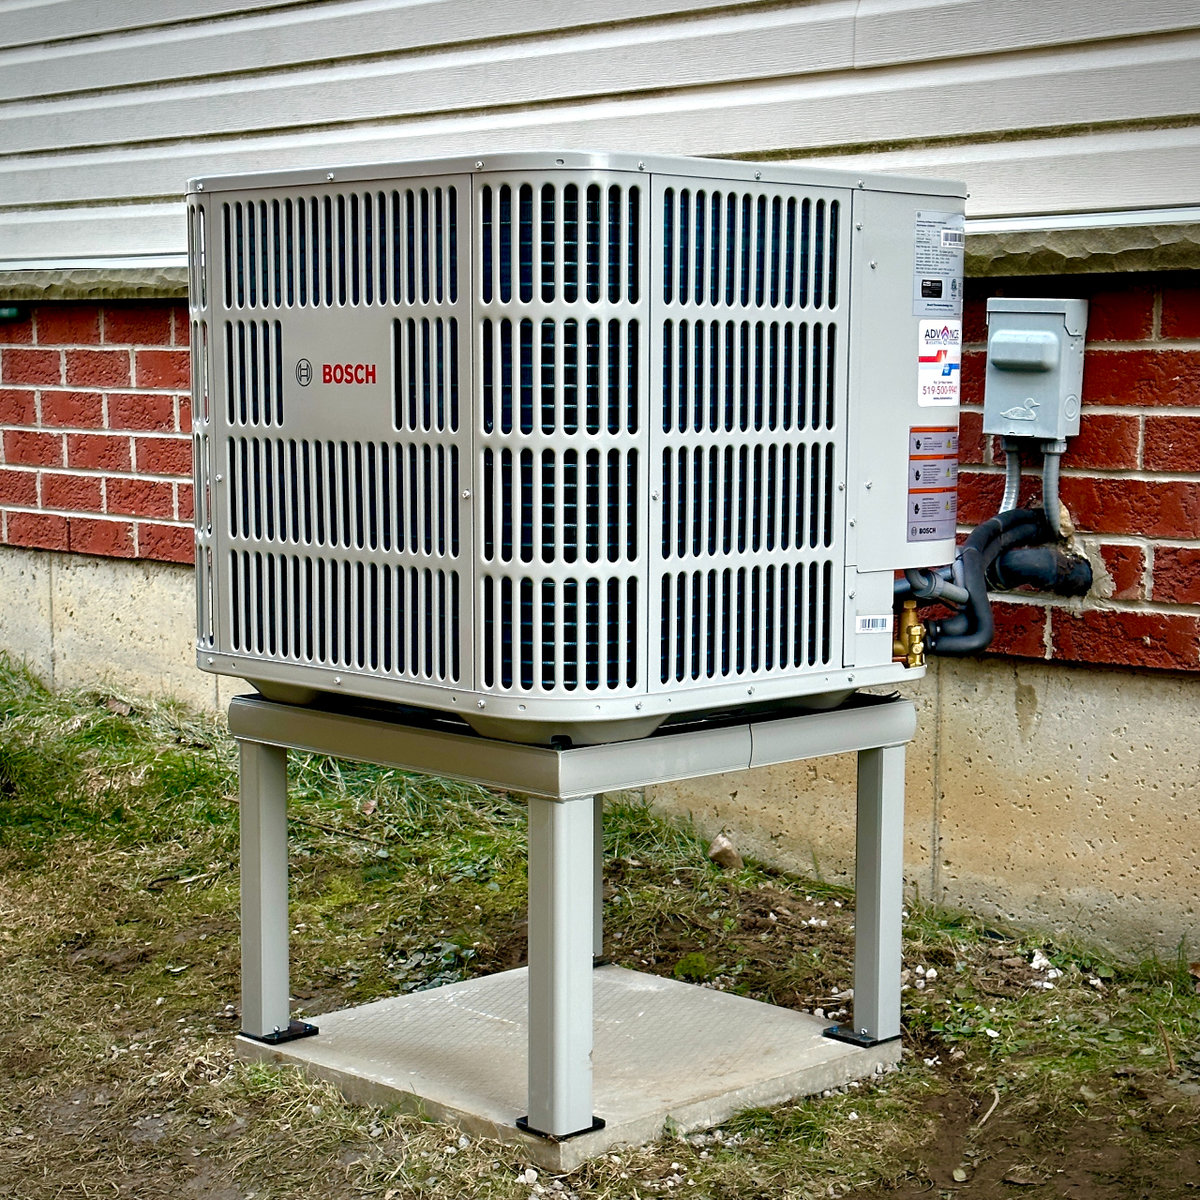 Bosch heat pump unit maintenance outside a residential home